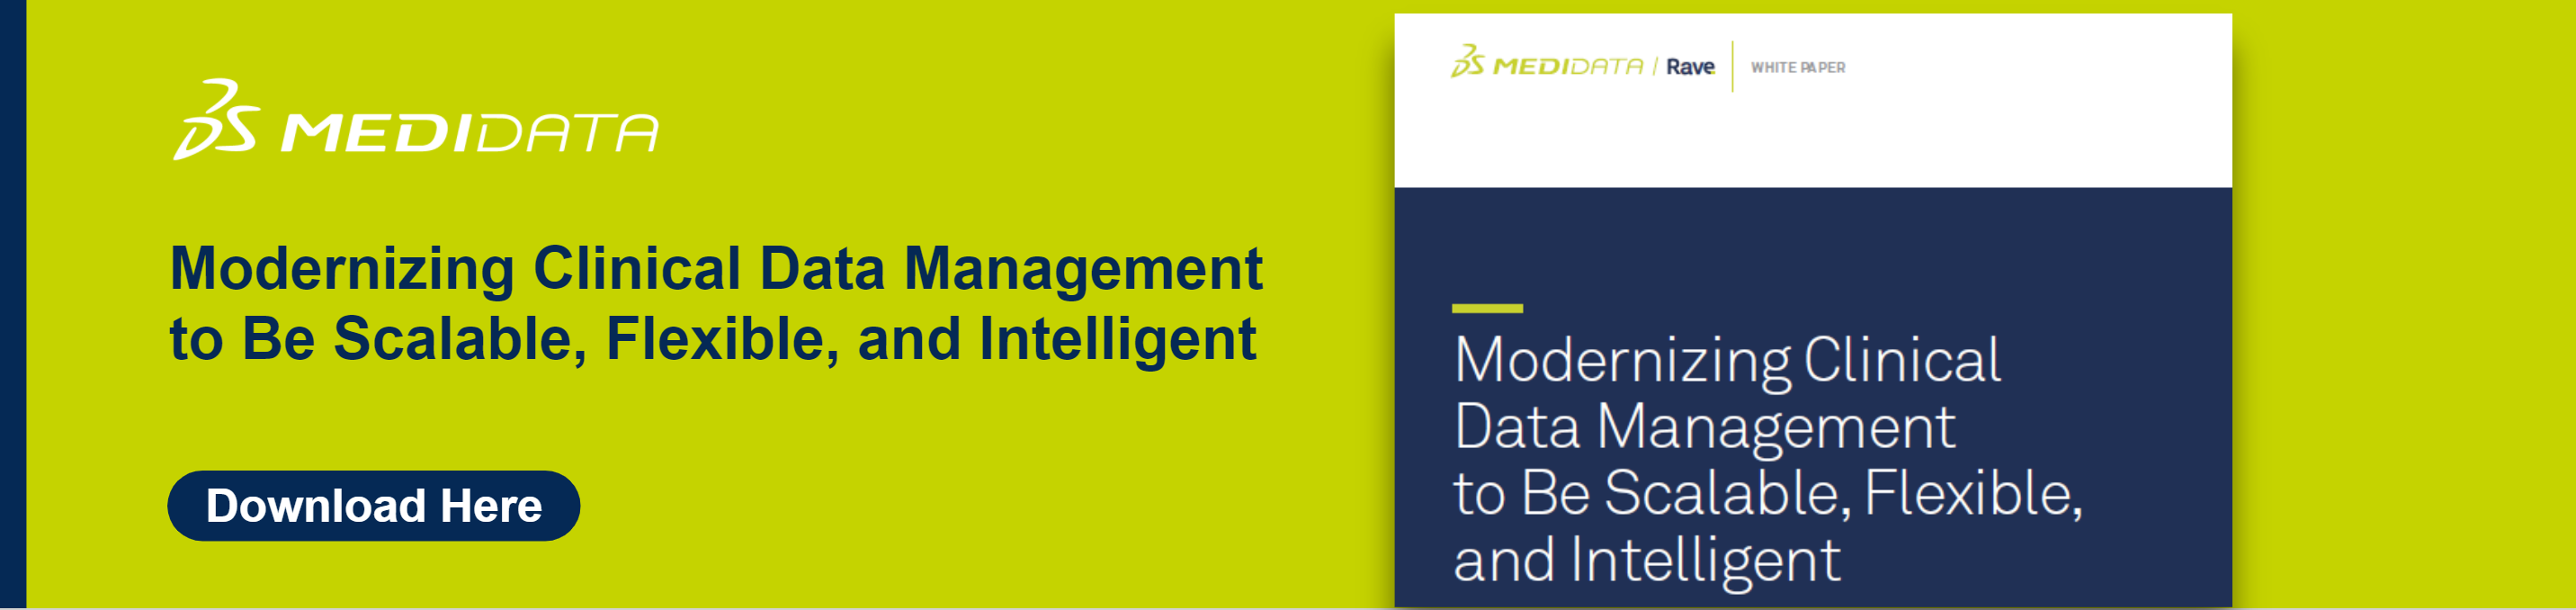 Modernizing Clinical Data Management